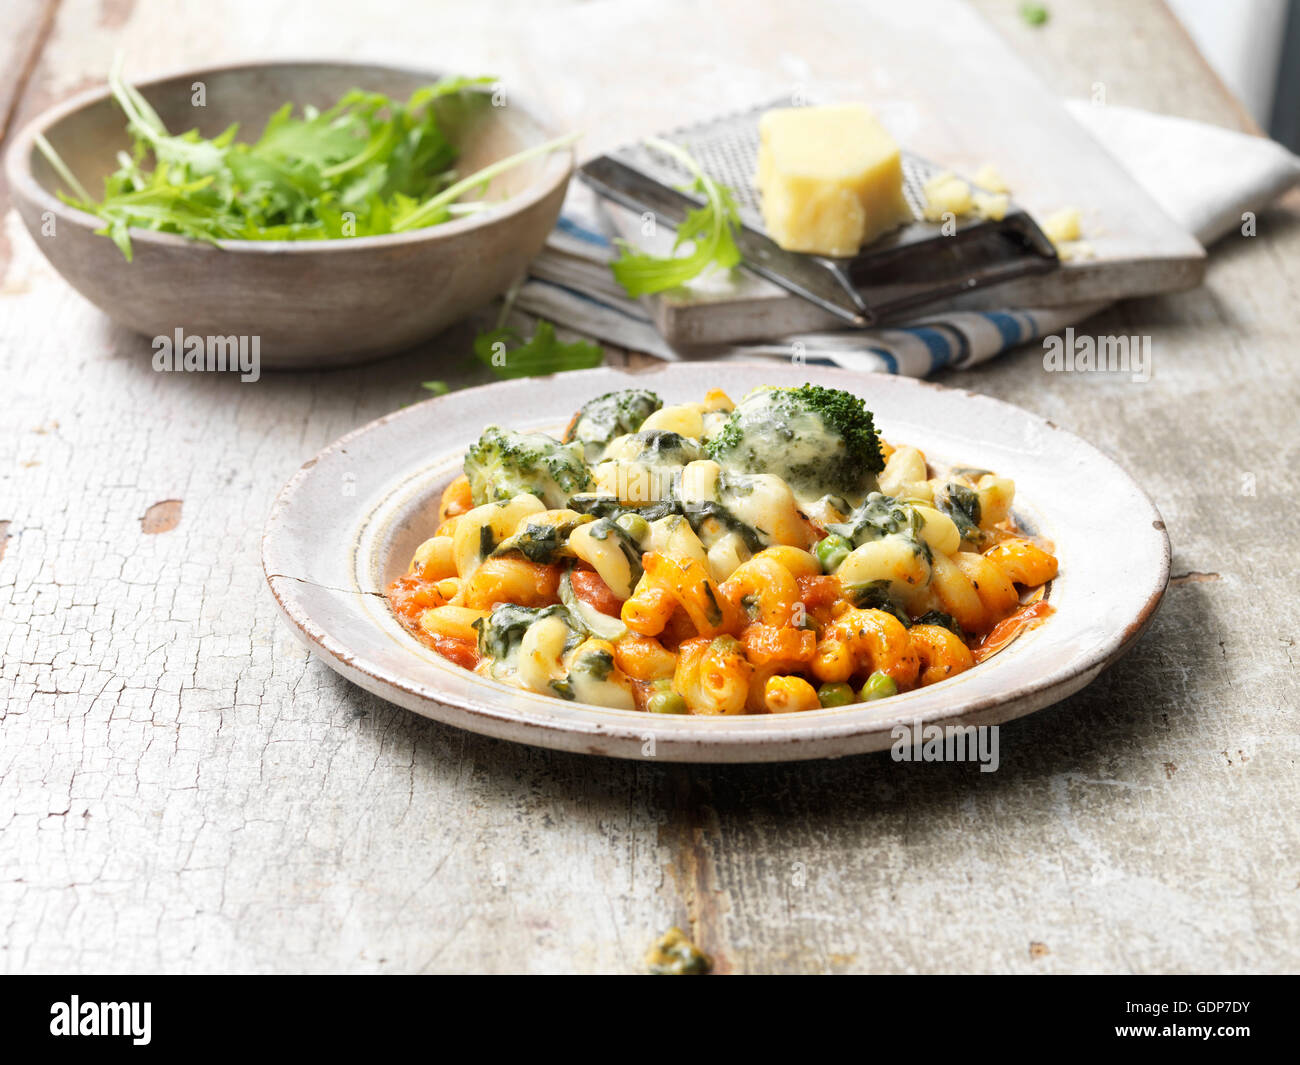 Food vegetarian meals vegetable pasta bake wooden table Stock Photo